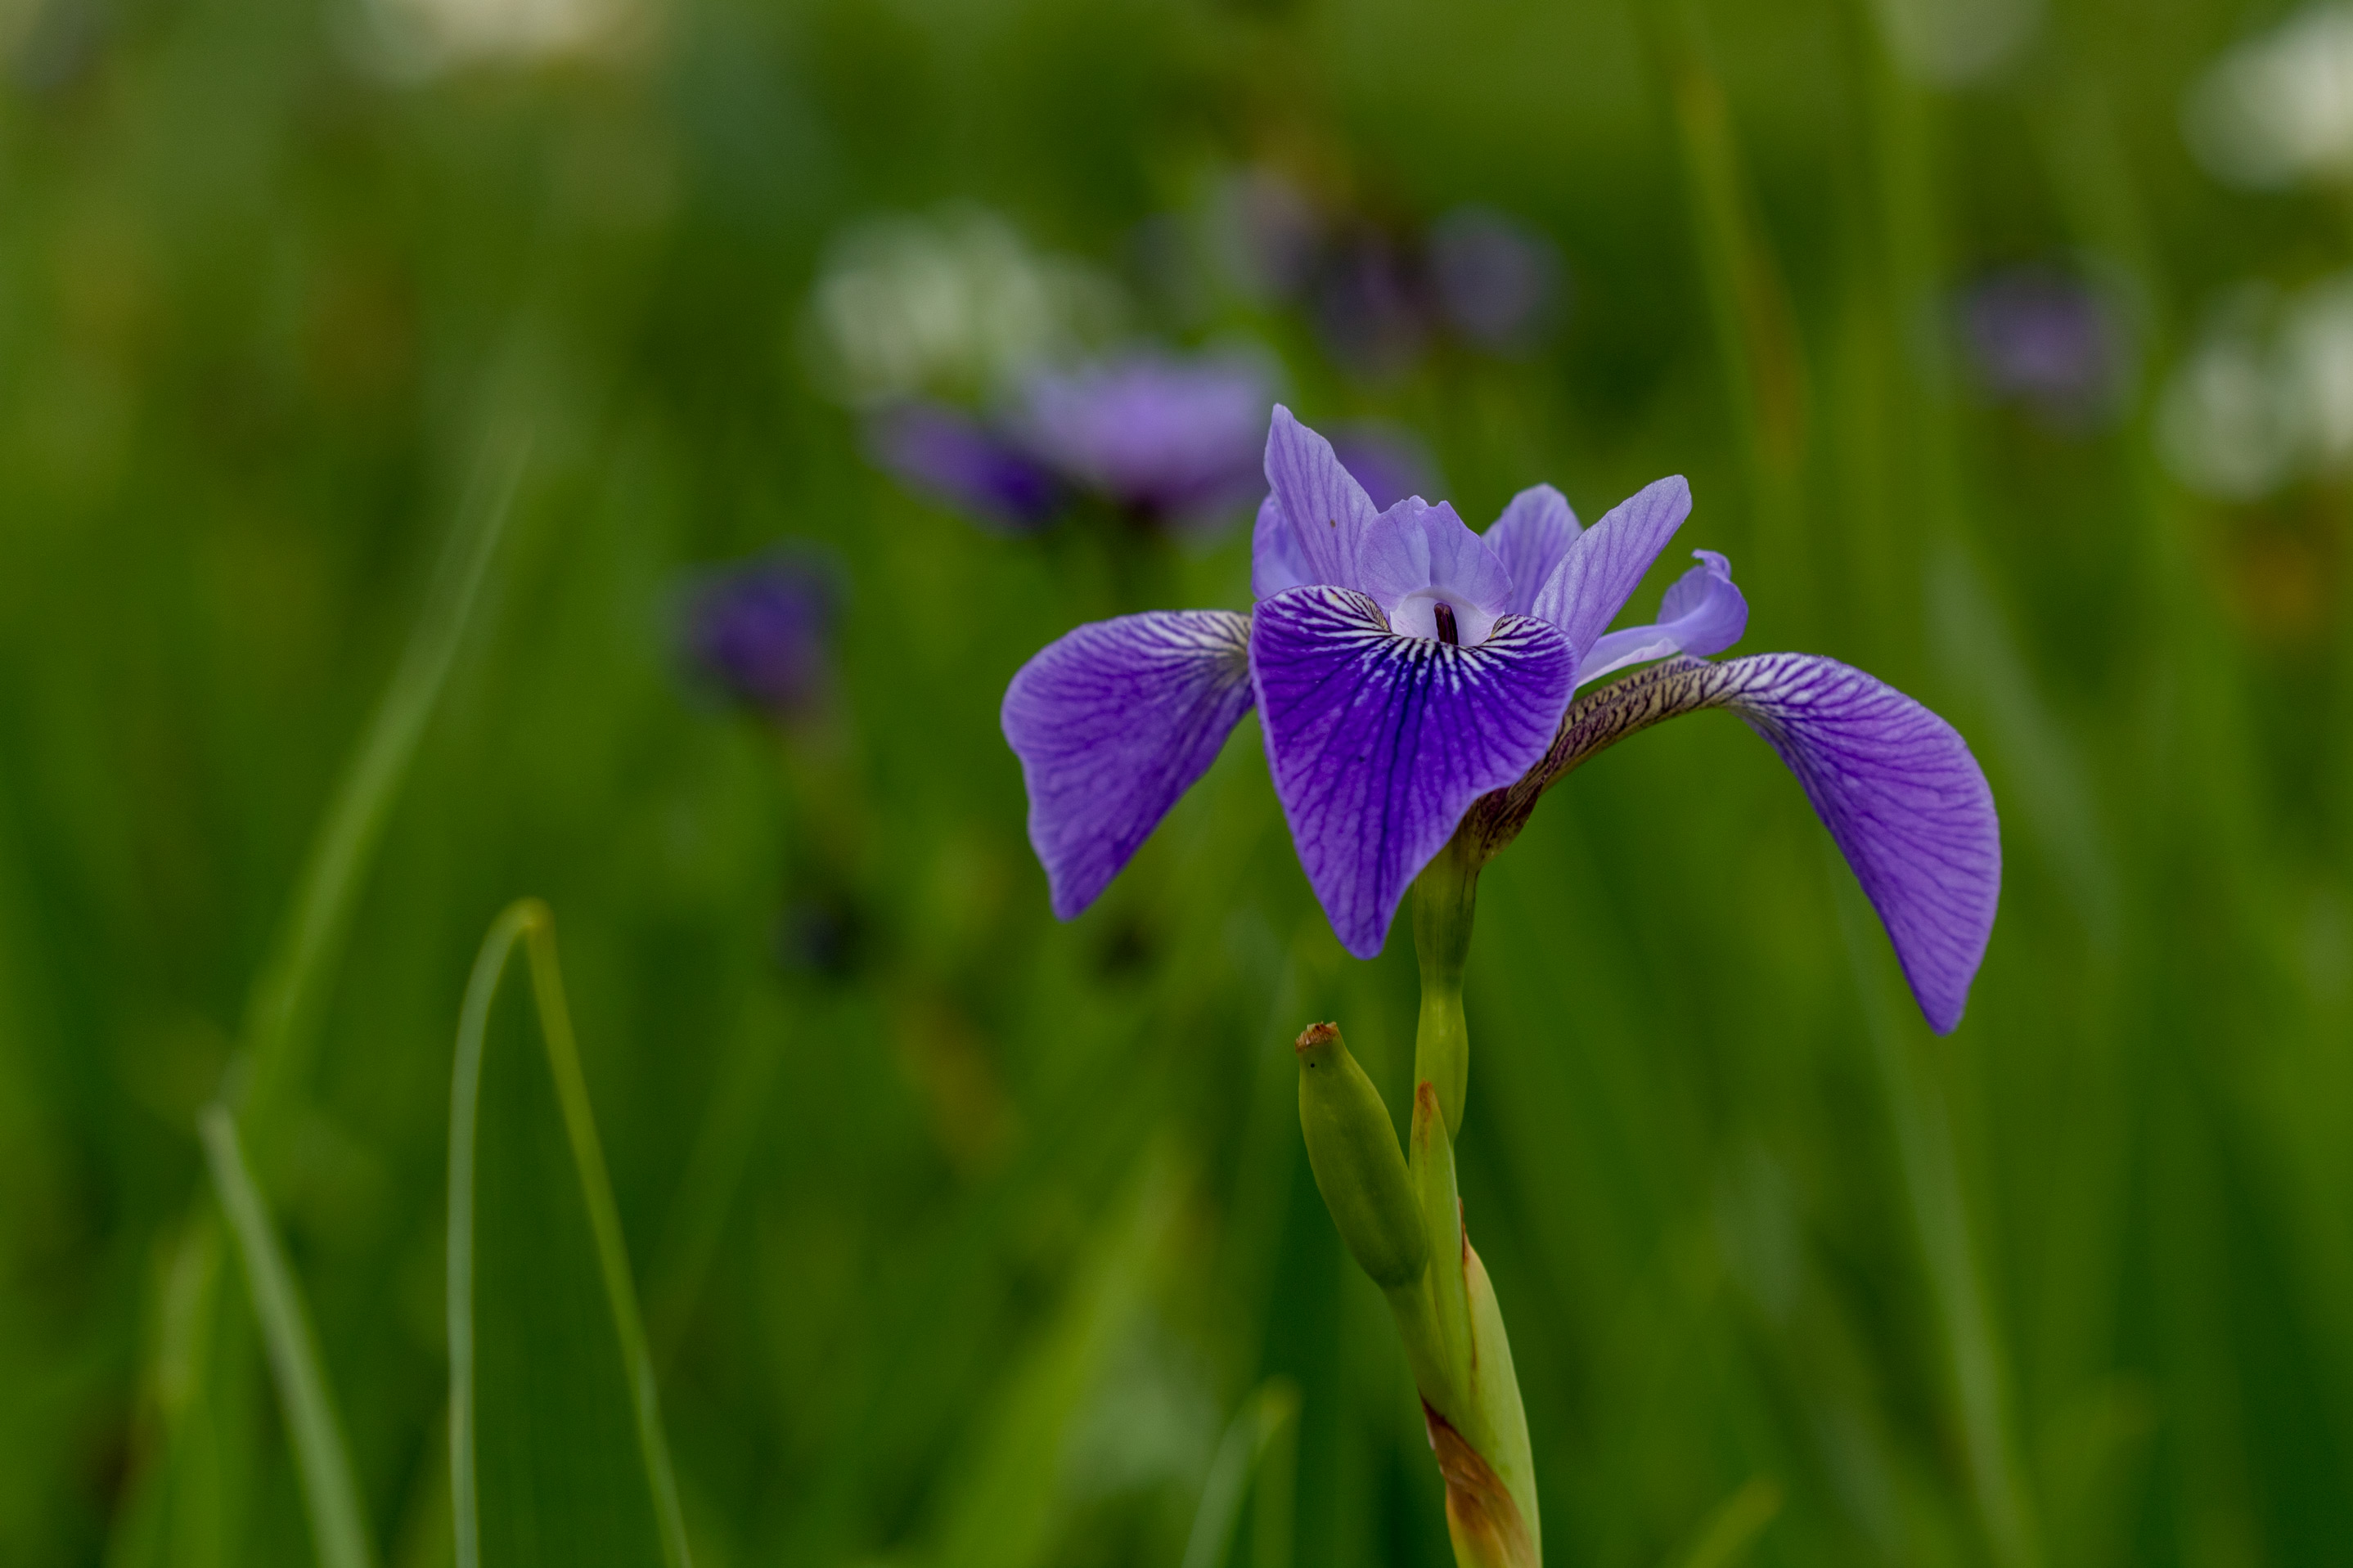 Blue iris against a blurred green background